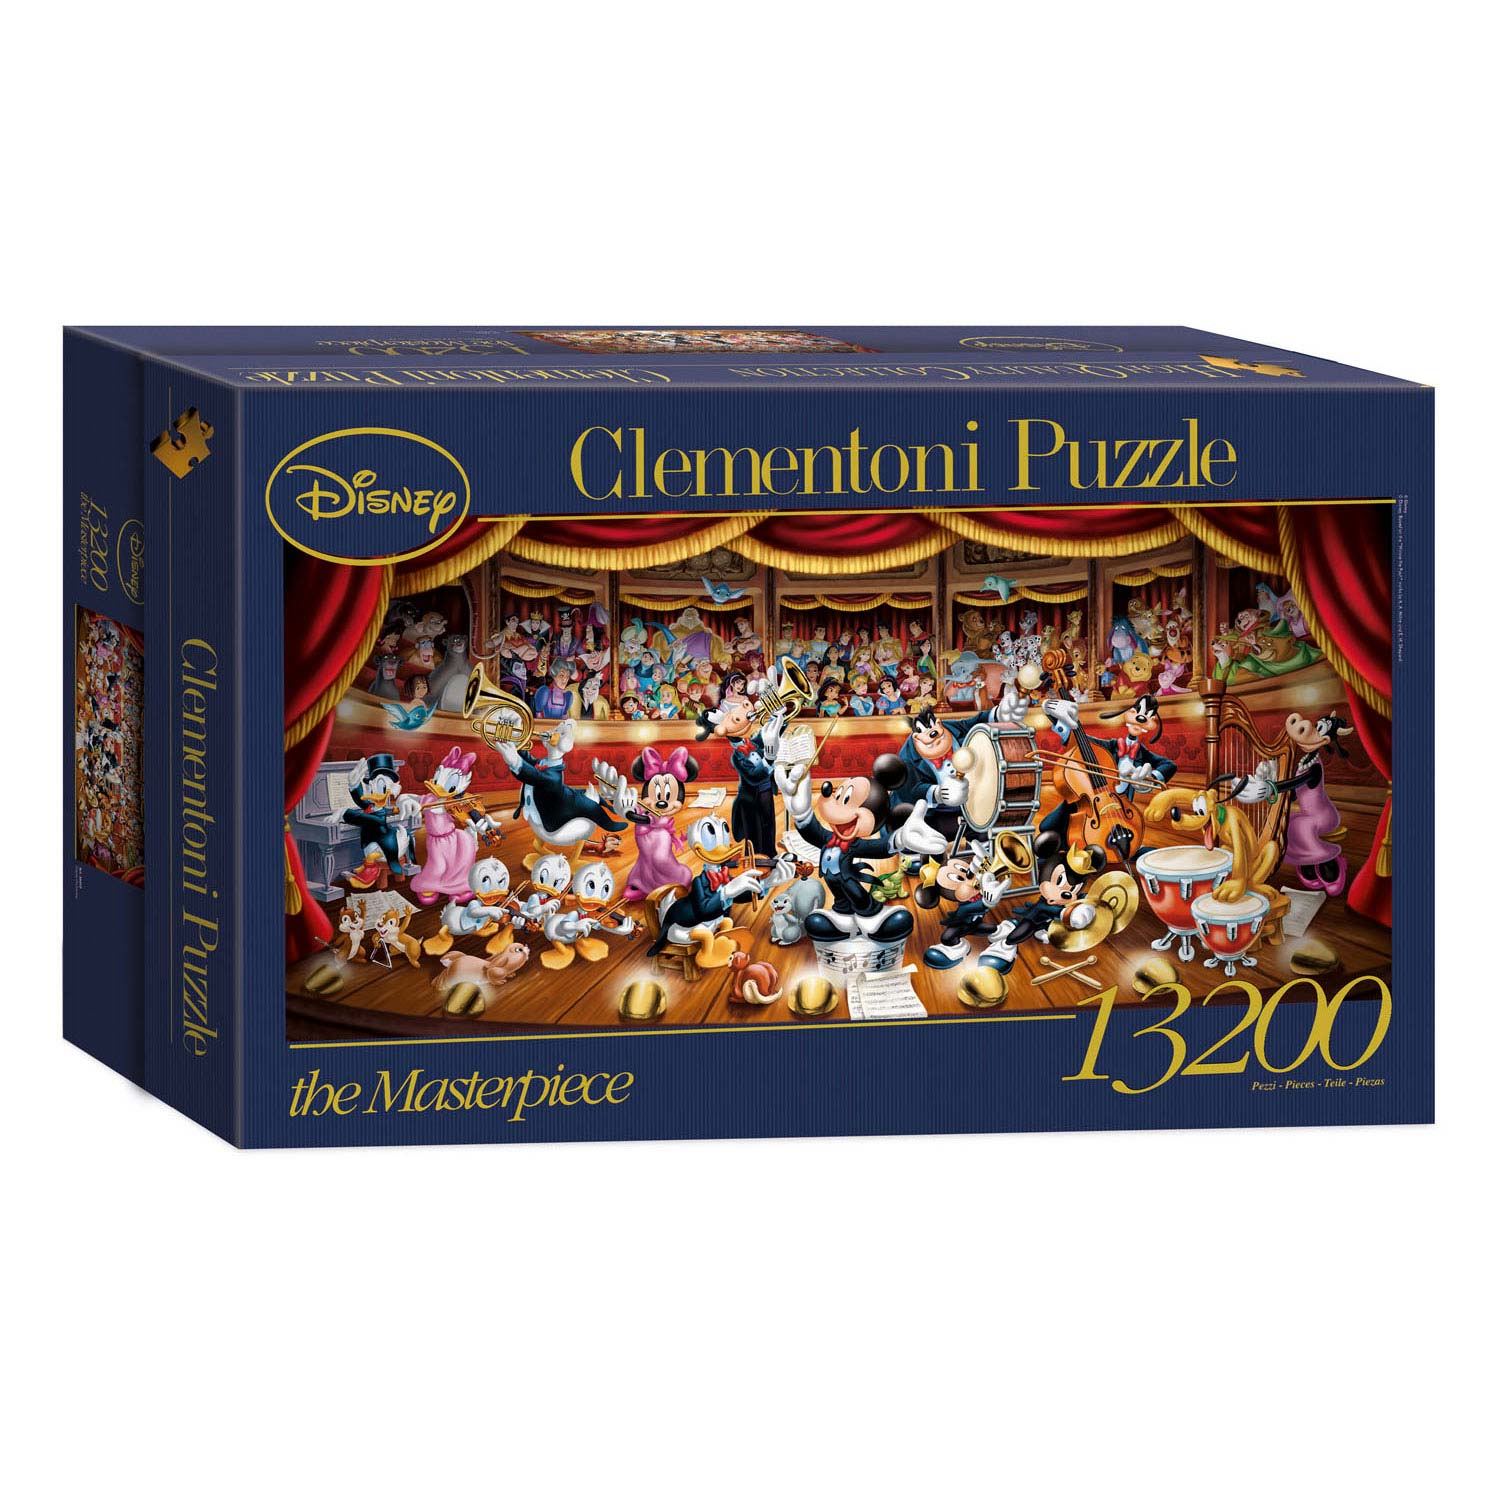 Clementoni Puzzel Disney Orkest, 13200st.